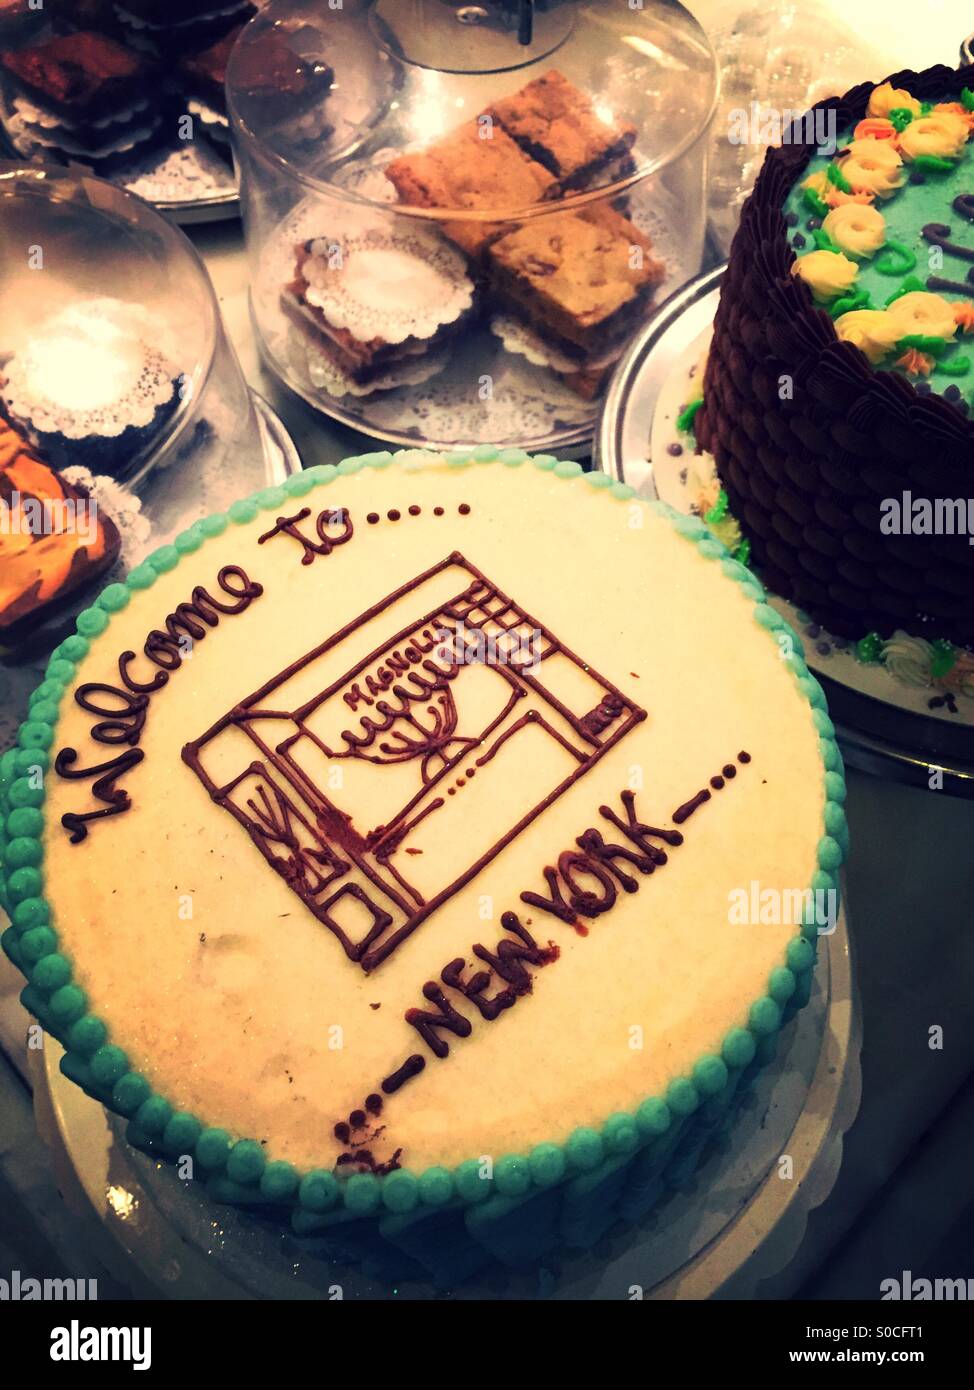 Welcome to New York Magnolia Bakery cake, NYC Stock Photo